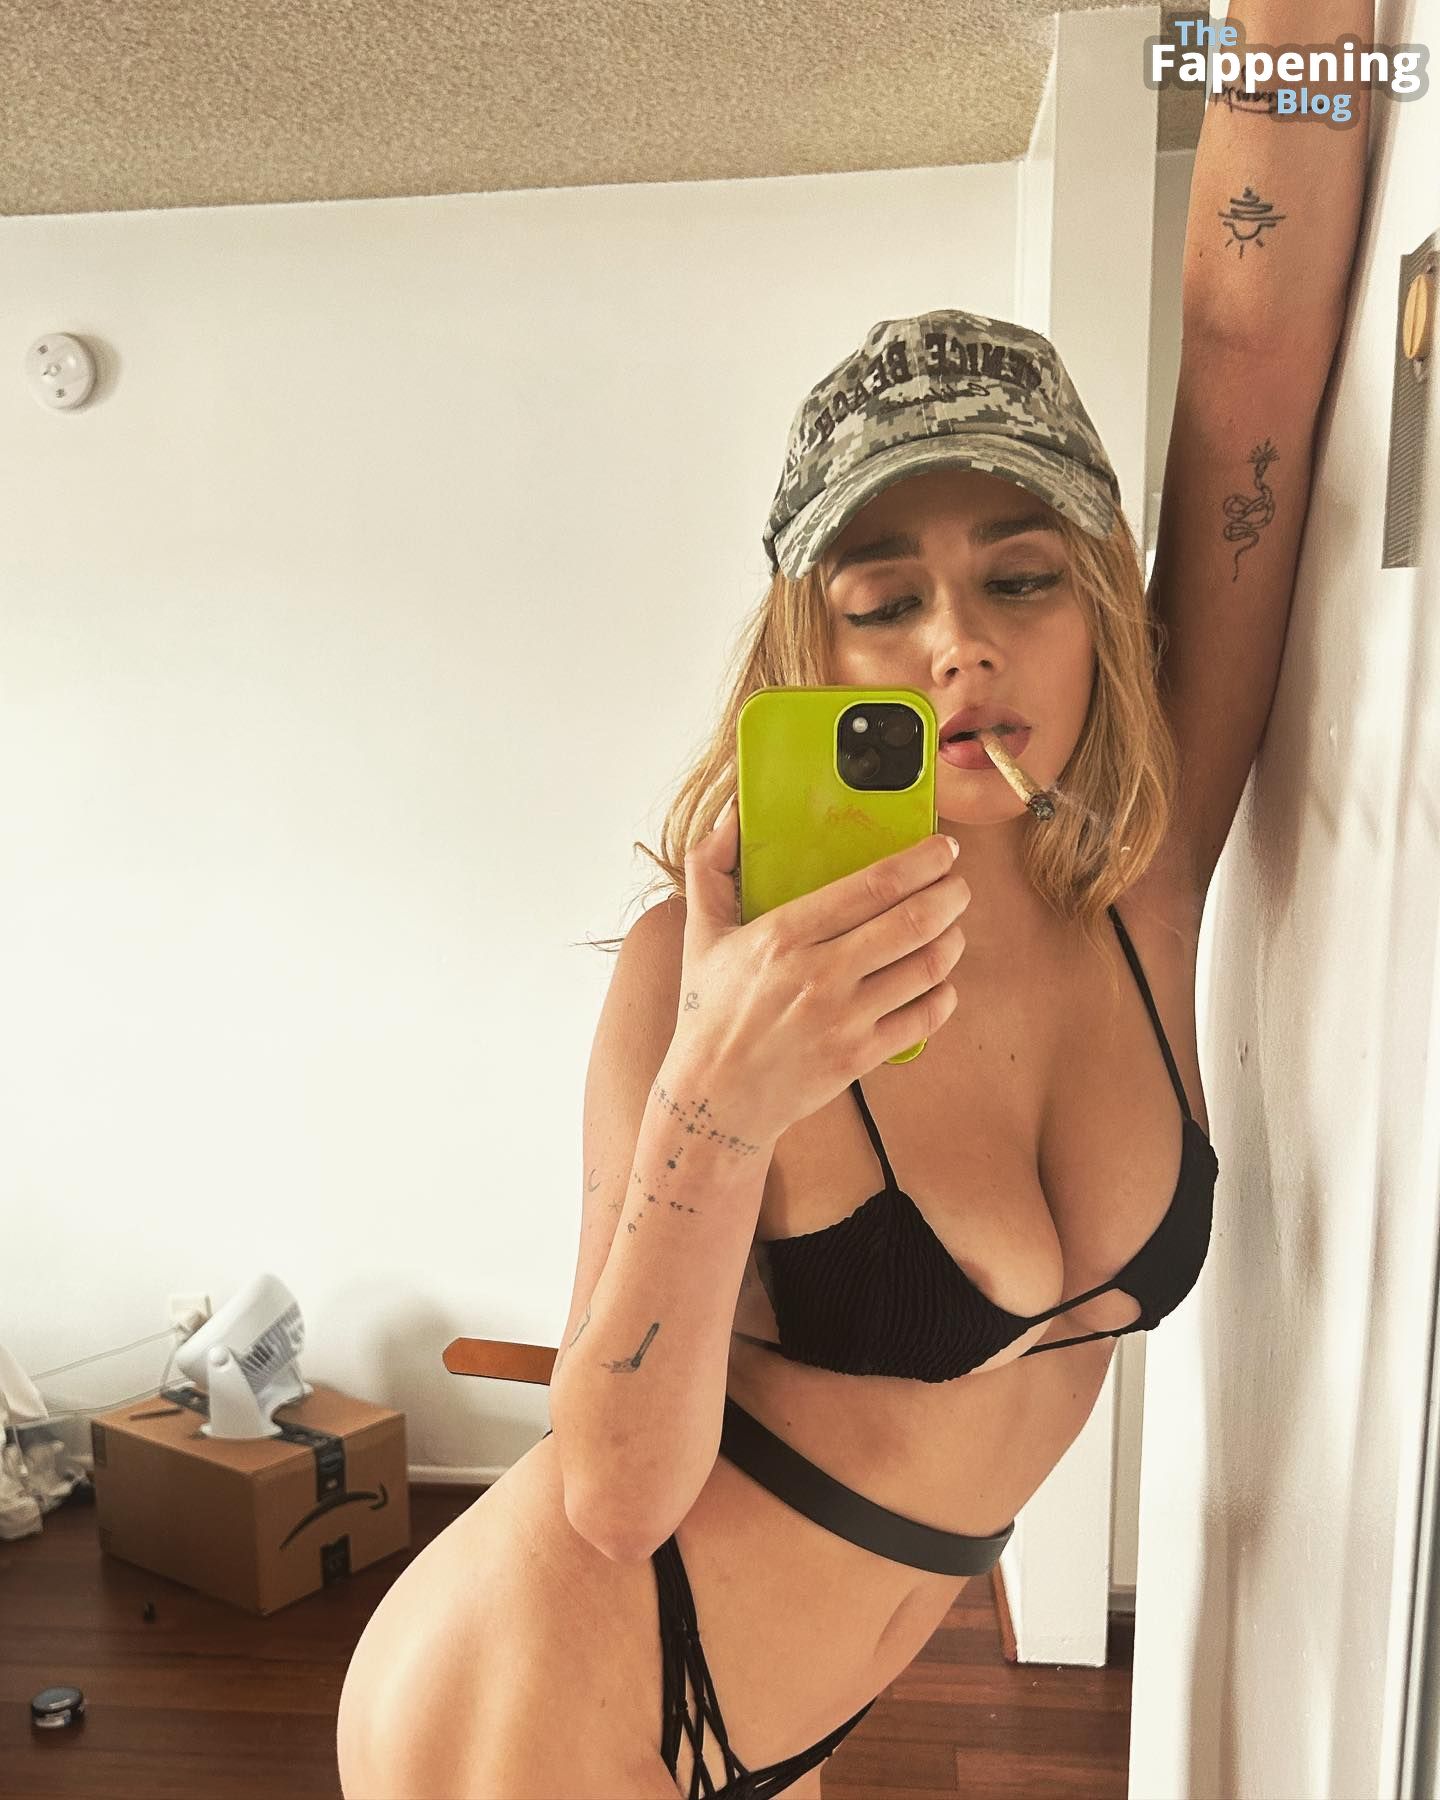 Paige-Jimenez-Nude-The-Fappening-Blog-2.jpg